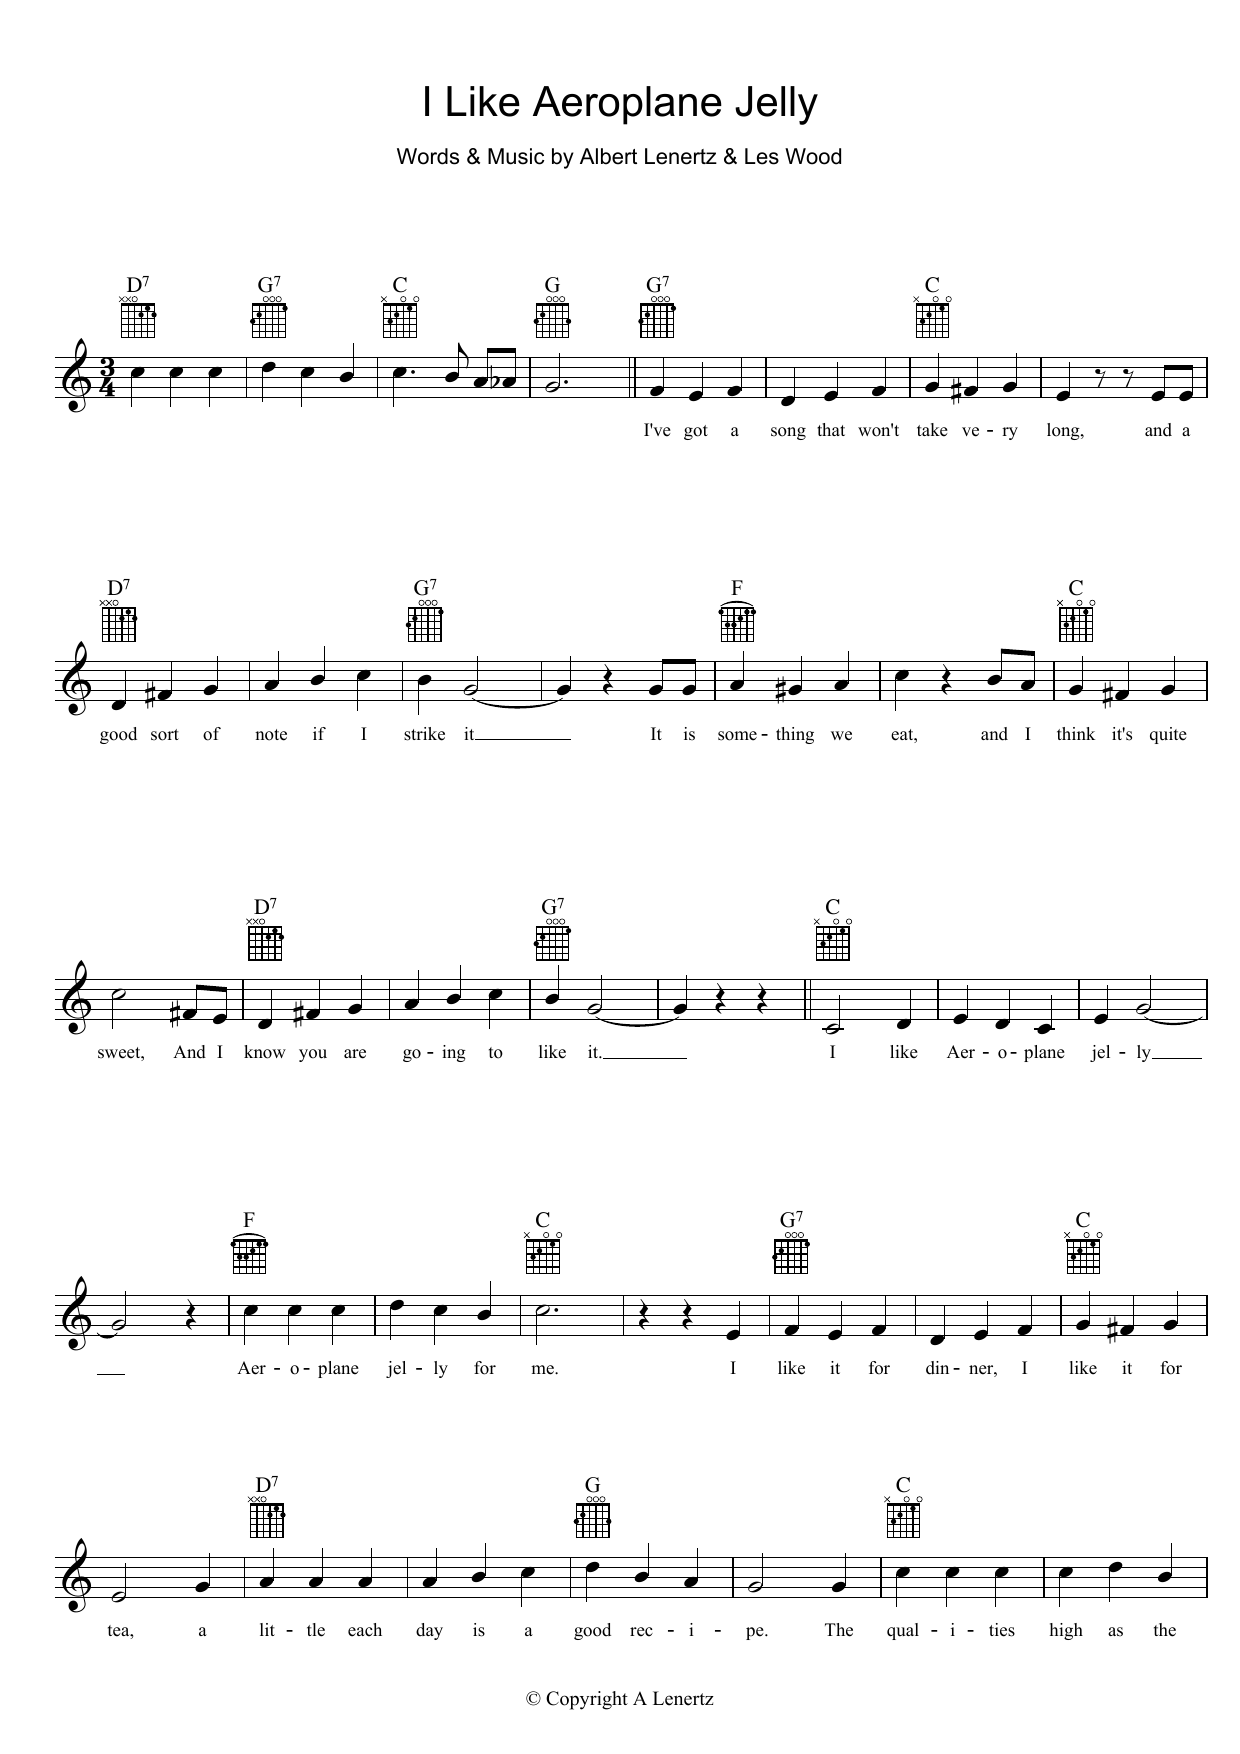 Joy King I Like Aeroplane Jelly Sheet Music Notes & Chords for Melody Line, Lyrics & Chords - Download or Print PDF